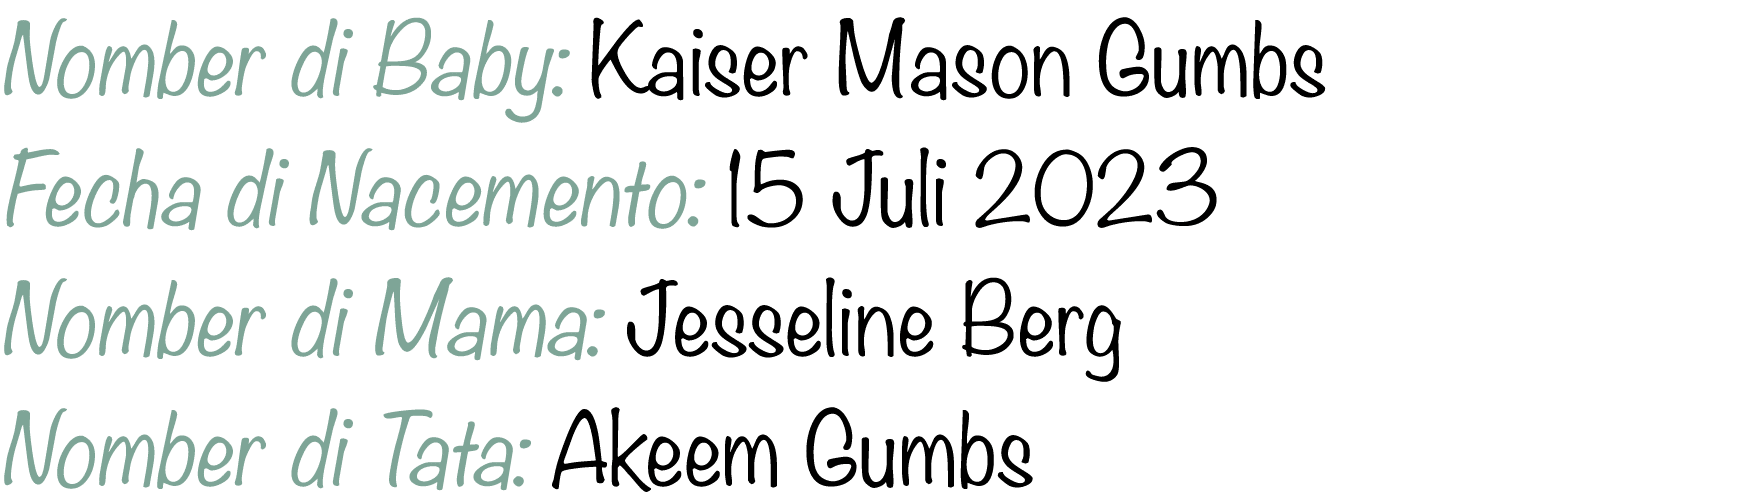 Nomber di Baby: Kaiser Mason Gumbs Fecha di Nacemento: 15 Juli 2023 Nomber di Mama: Jesseline Berg Nomber di Tata: Ak...